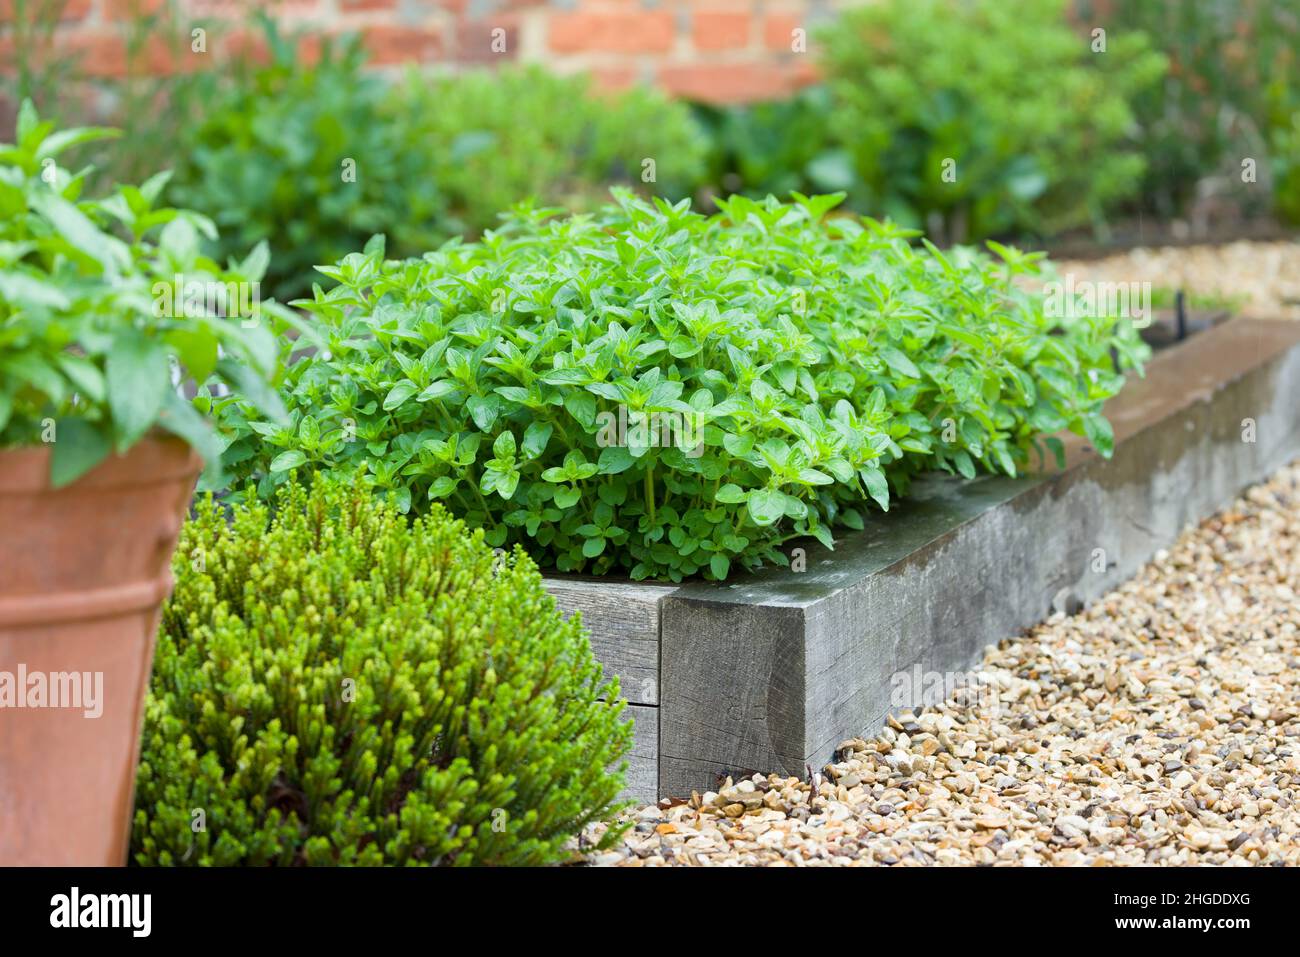 Fresh herbs growing in a garden, oregano plant in a container, UK garden details Stock Photo